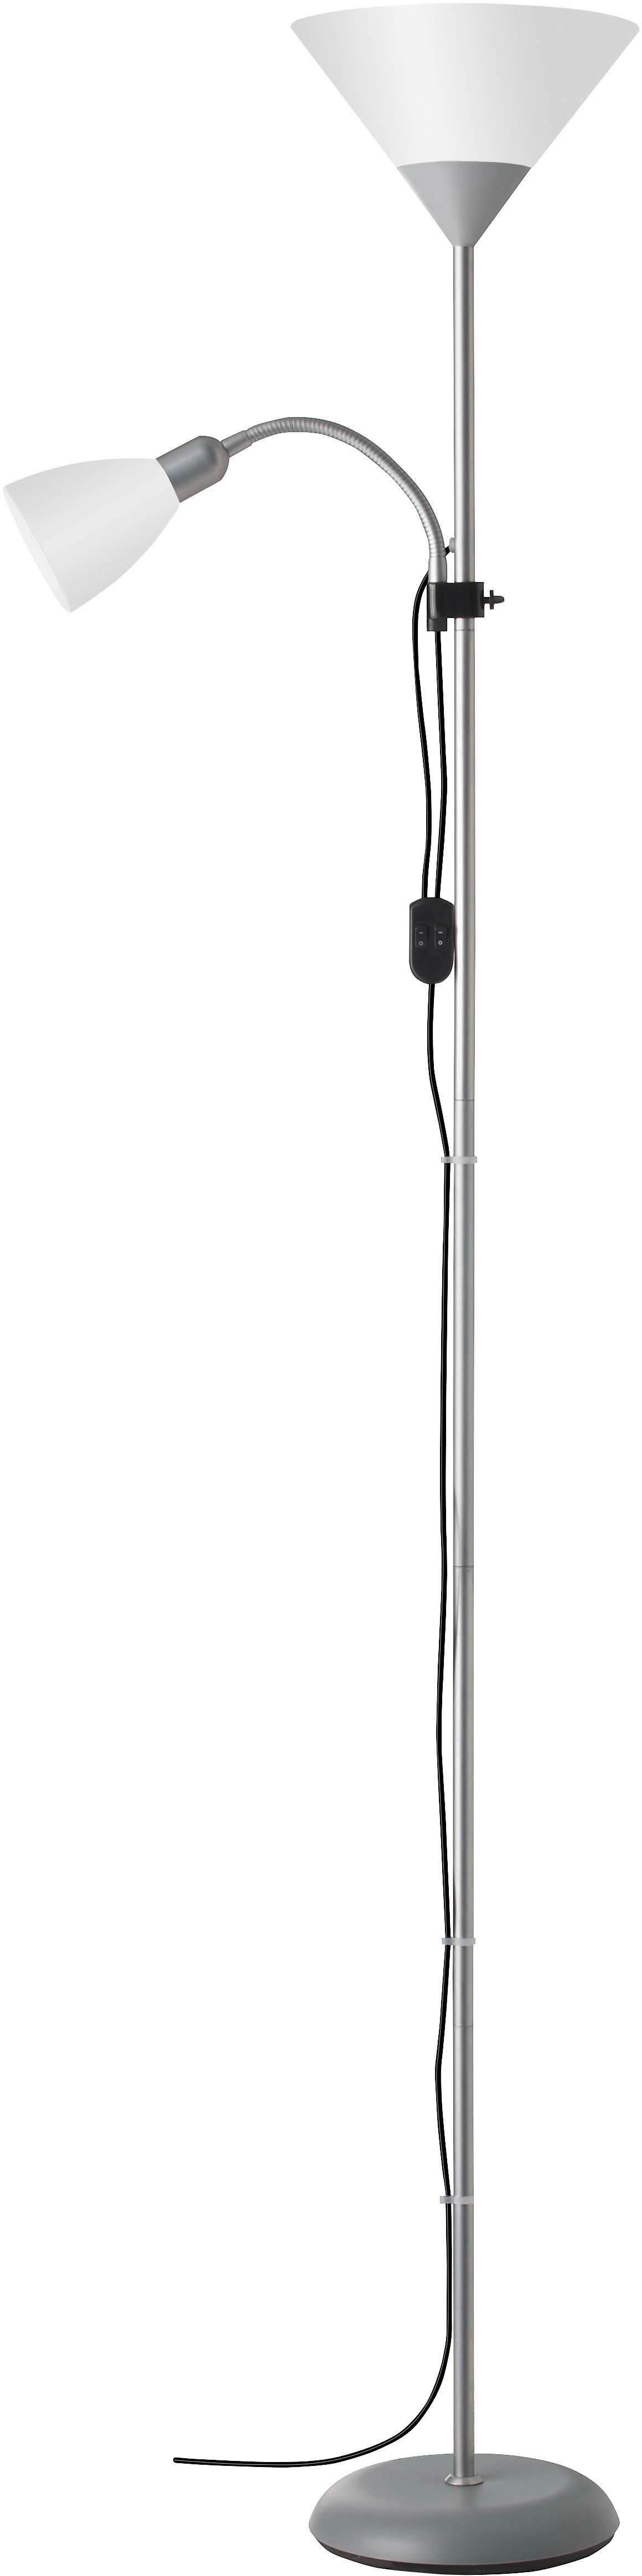 Brilliant Uplighter SPARI, ohne Leuchtmittel, 180 cm Höhe, Ø 25 cm, E27 + E14, Aluminium/Kunststoff, schwarz/weiß